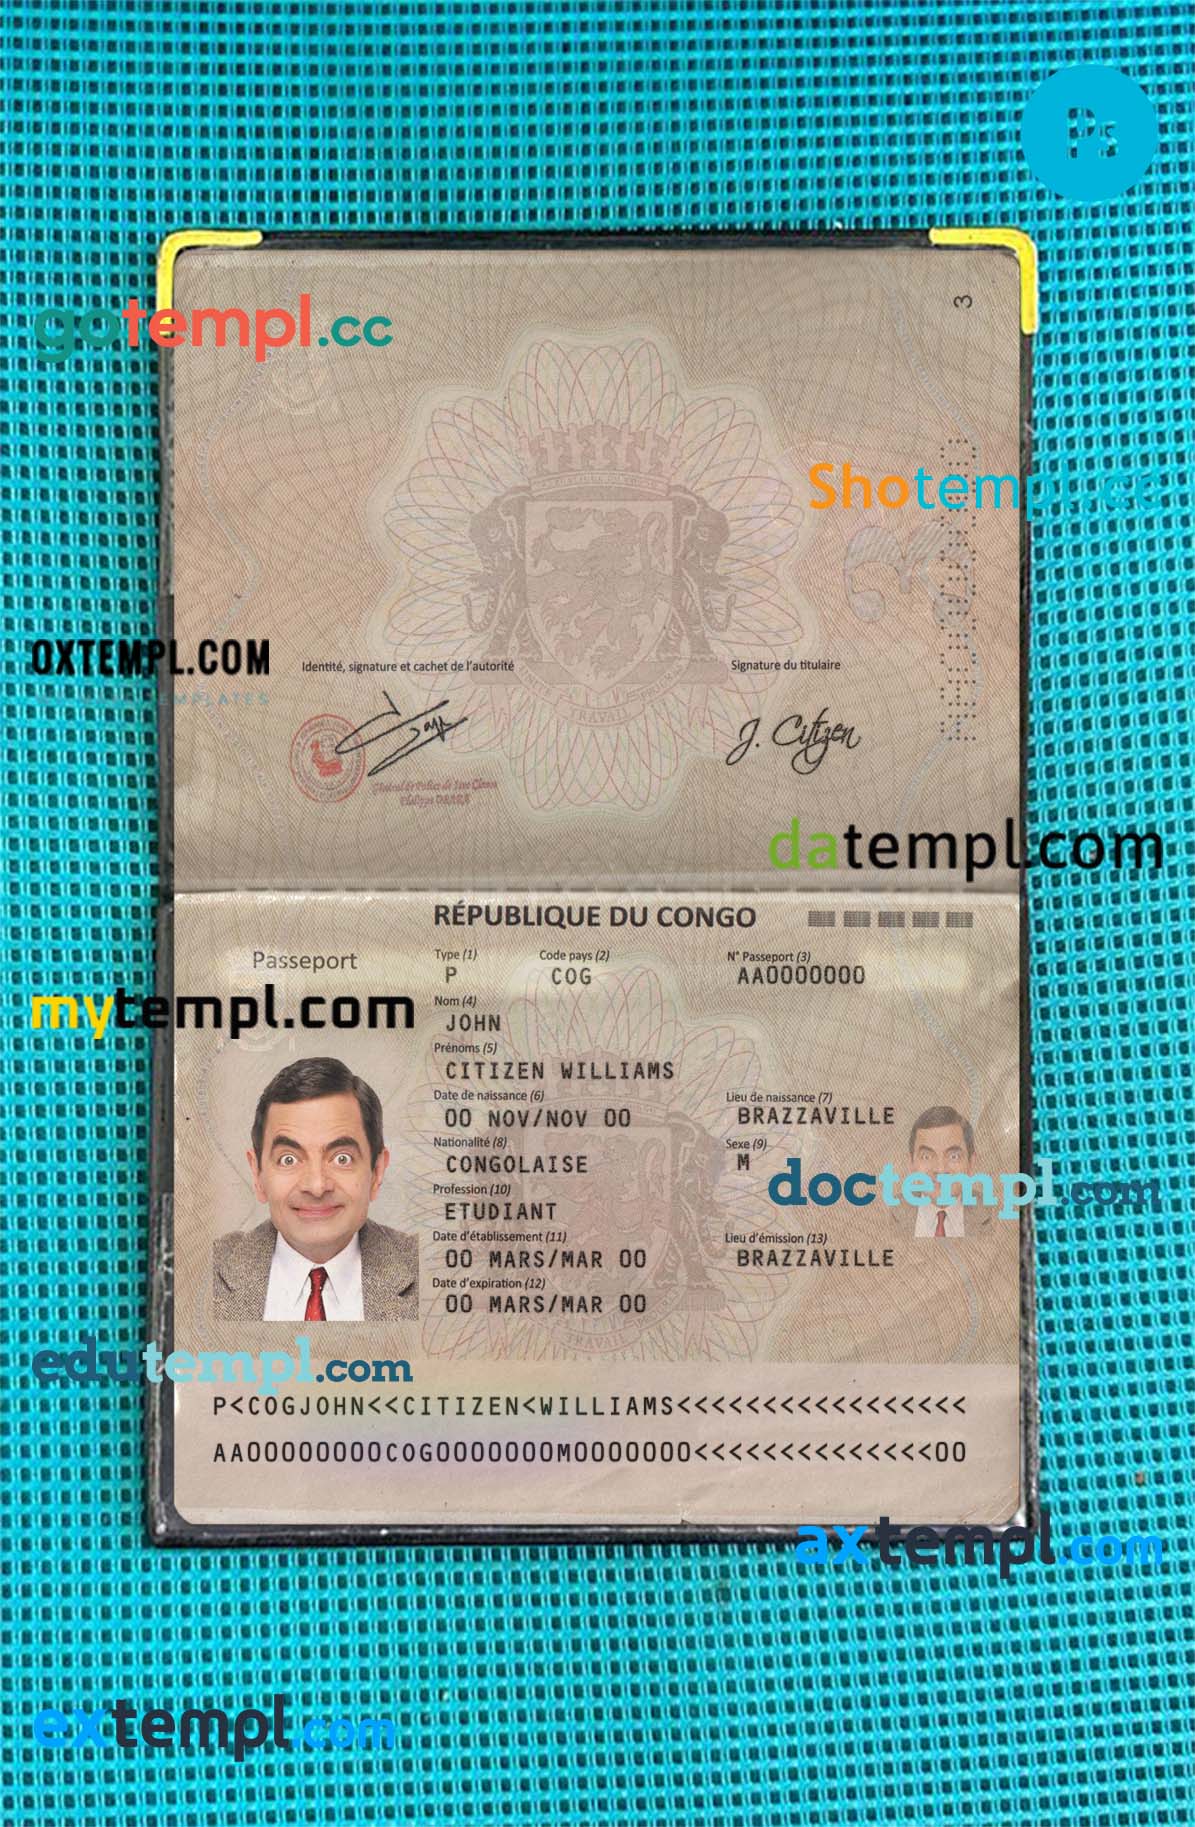 Spain residence permit card PSD template, completely editable